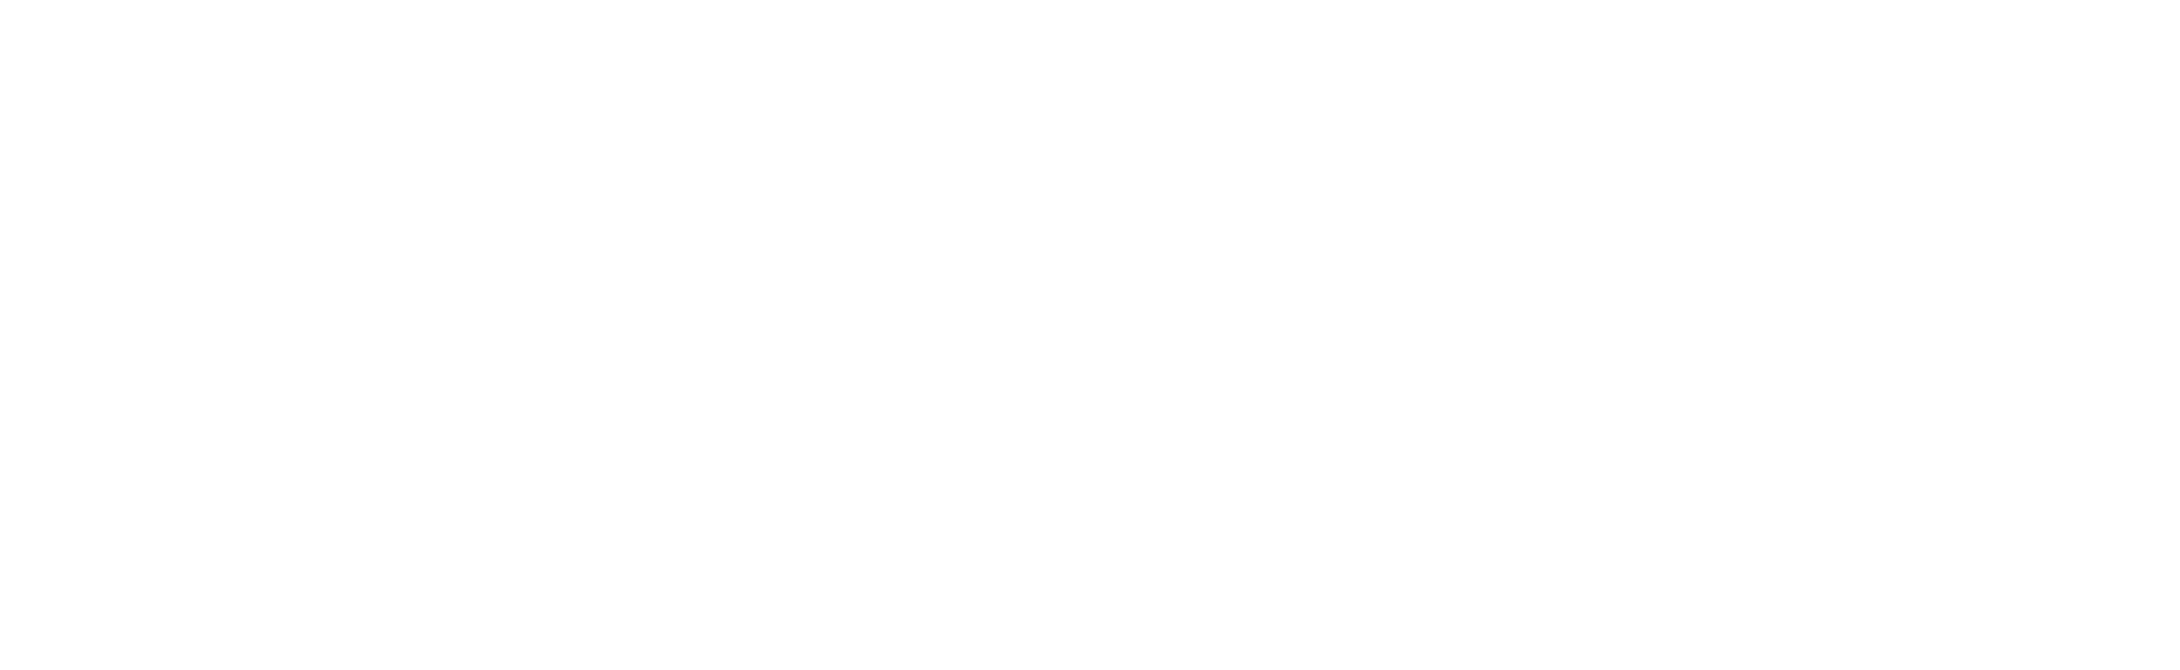 White Boxall Profile Online logo